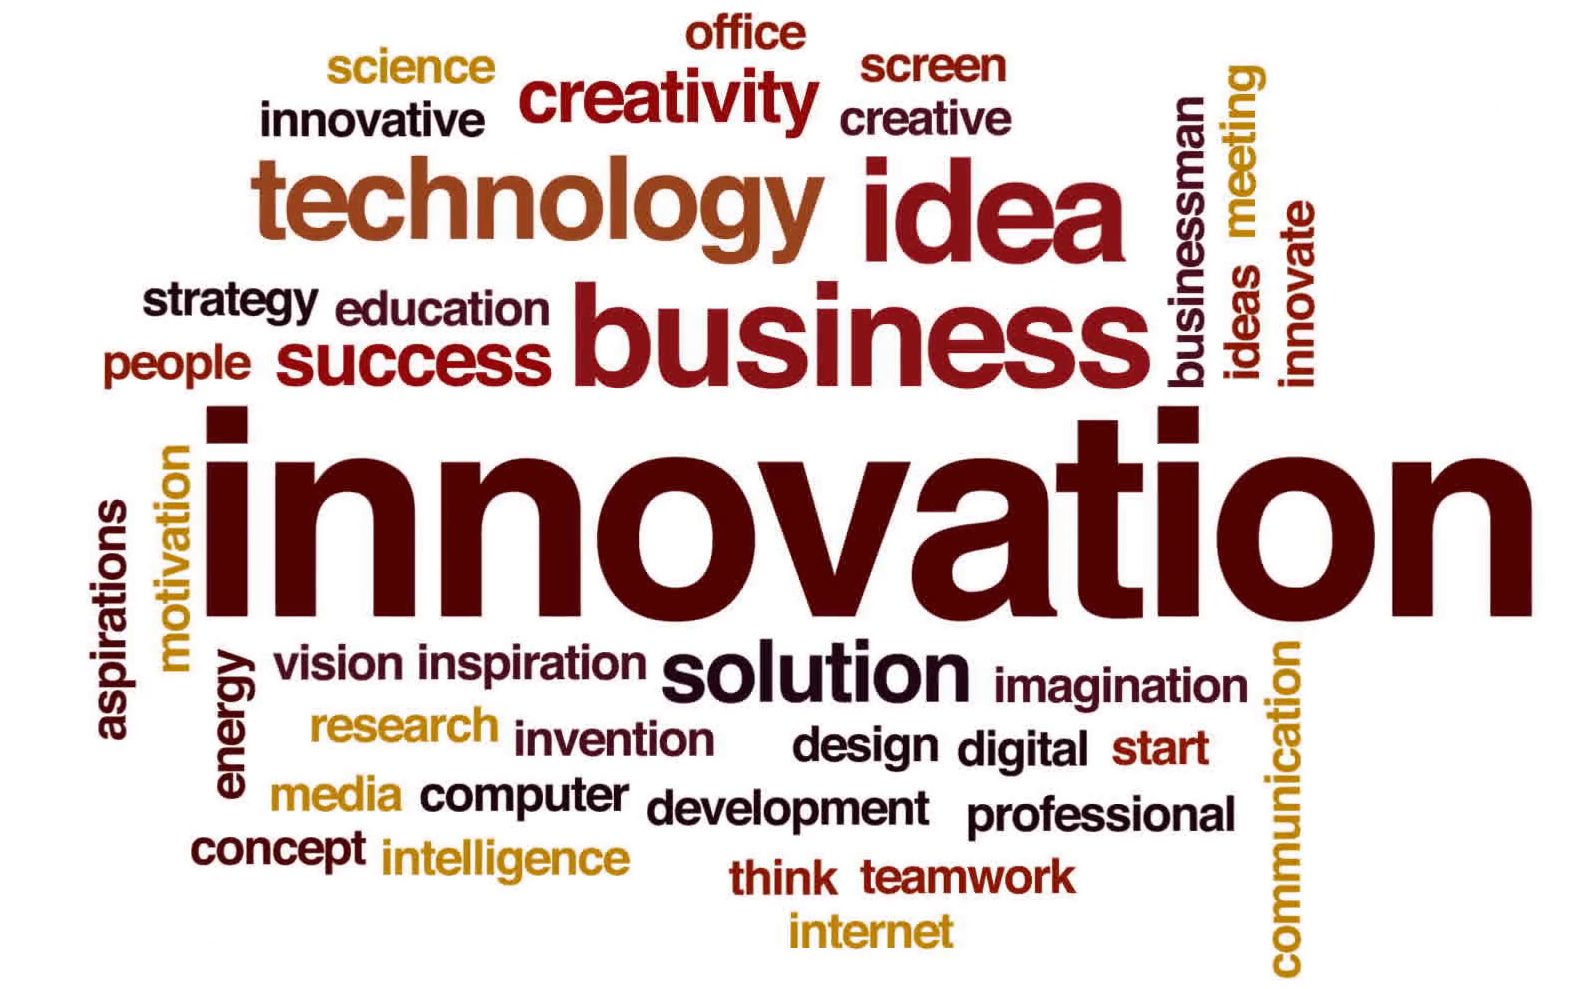 Technology innovation image